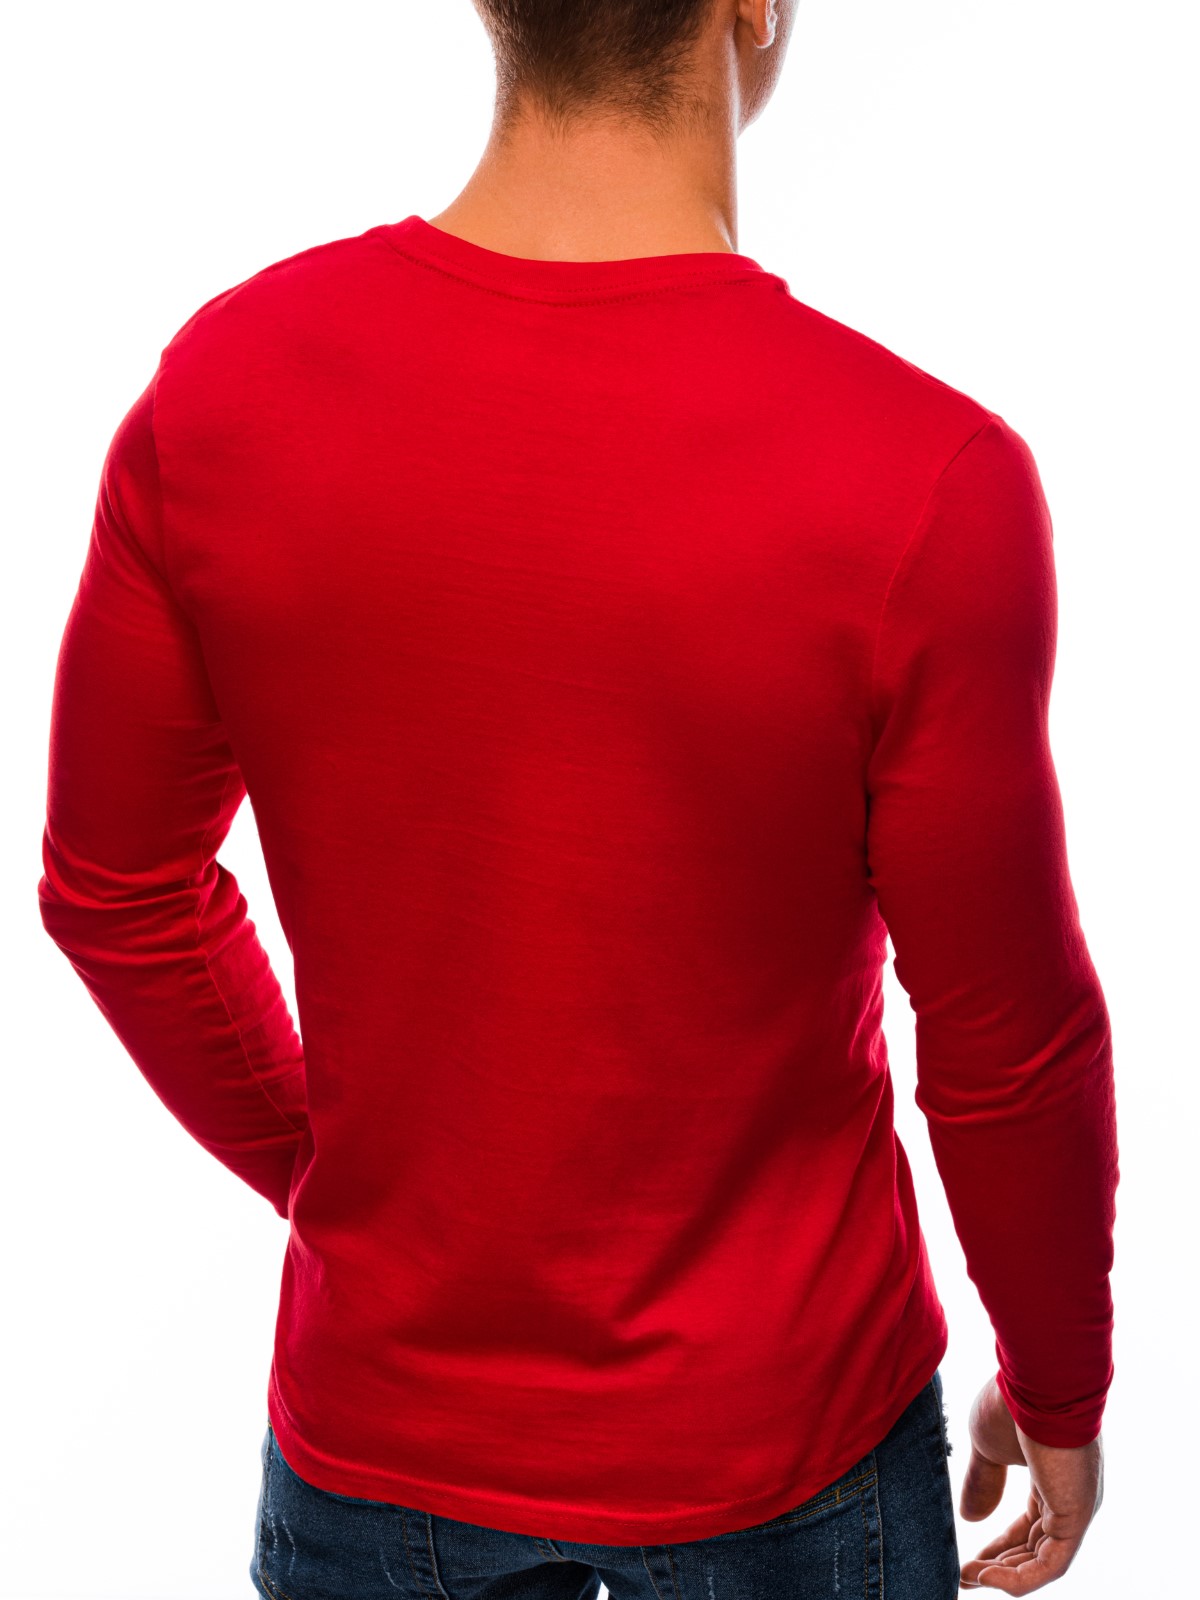 red long sleeve shirt mens